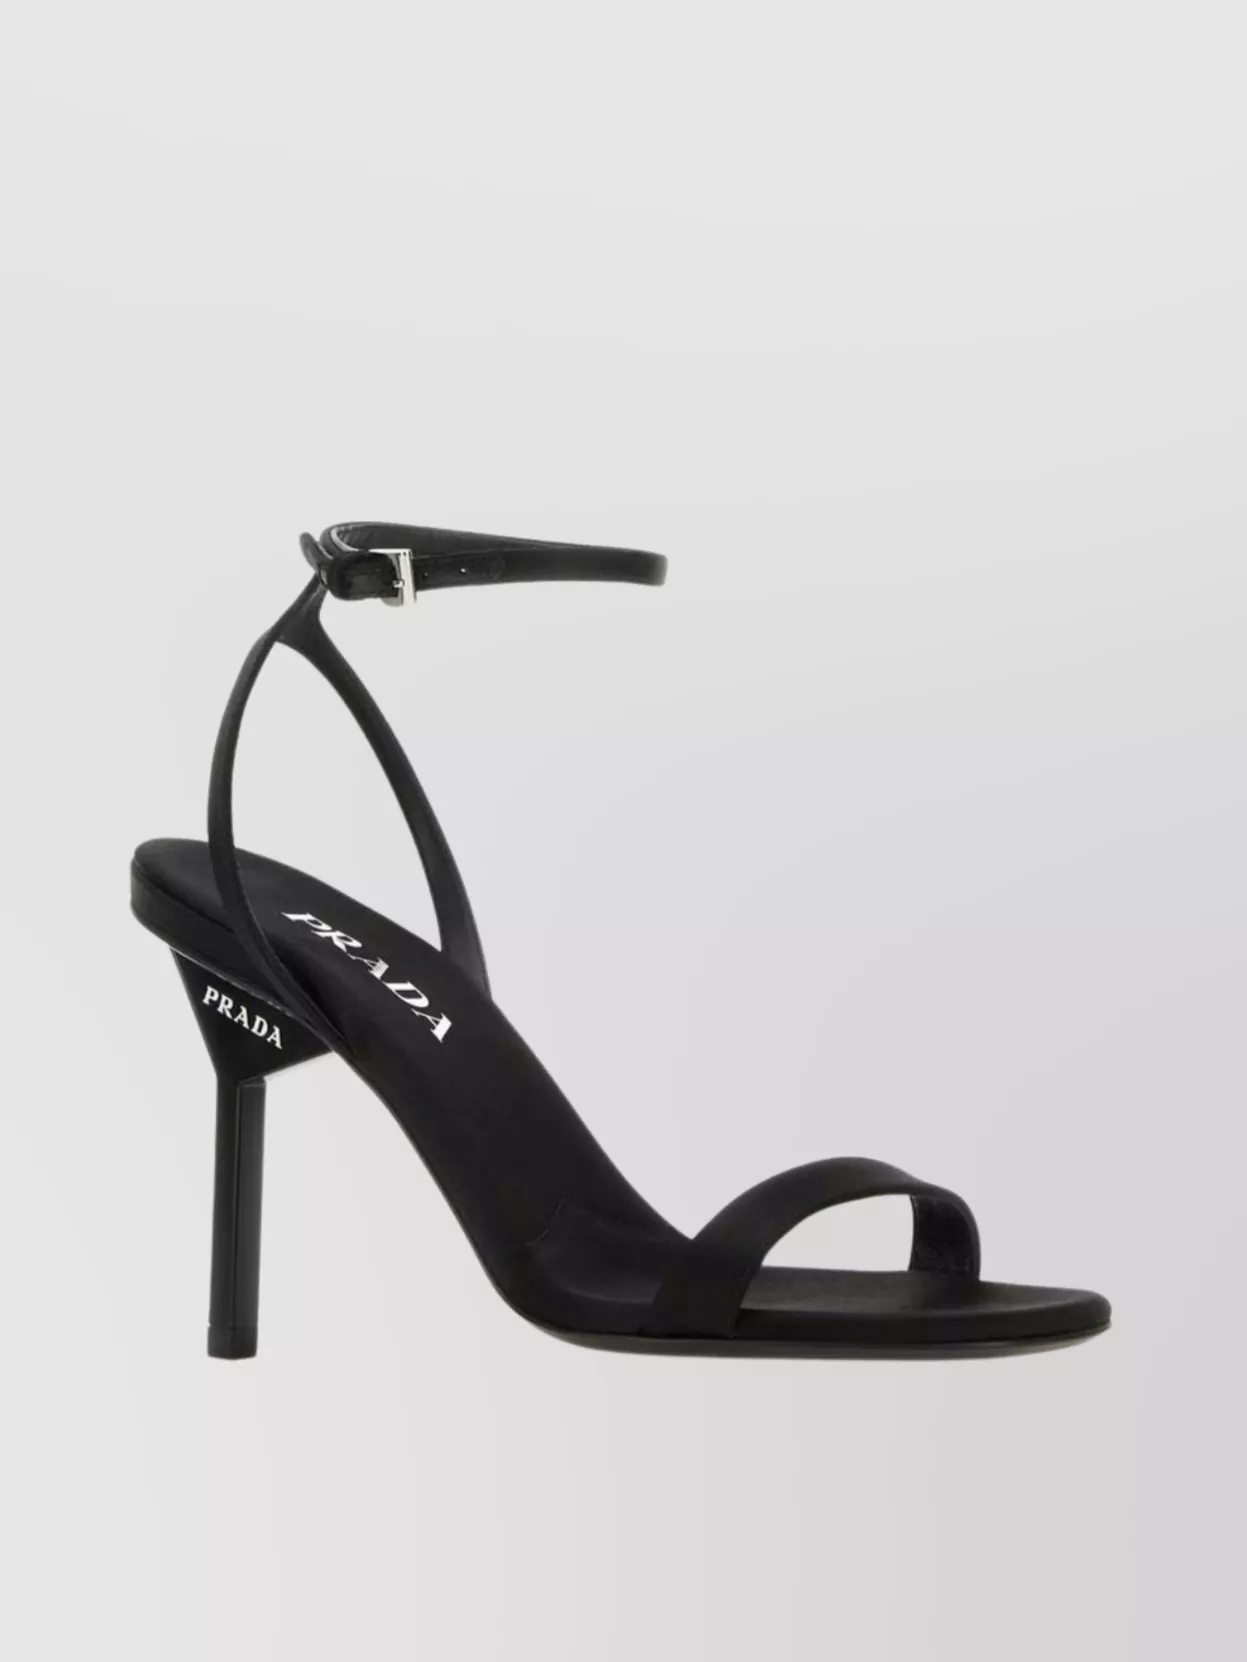 Prada Satin Sandals With Open Toe And Stiletto Heel In Black